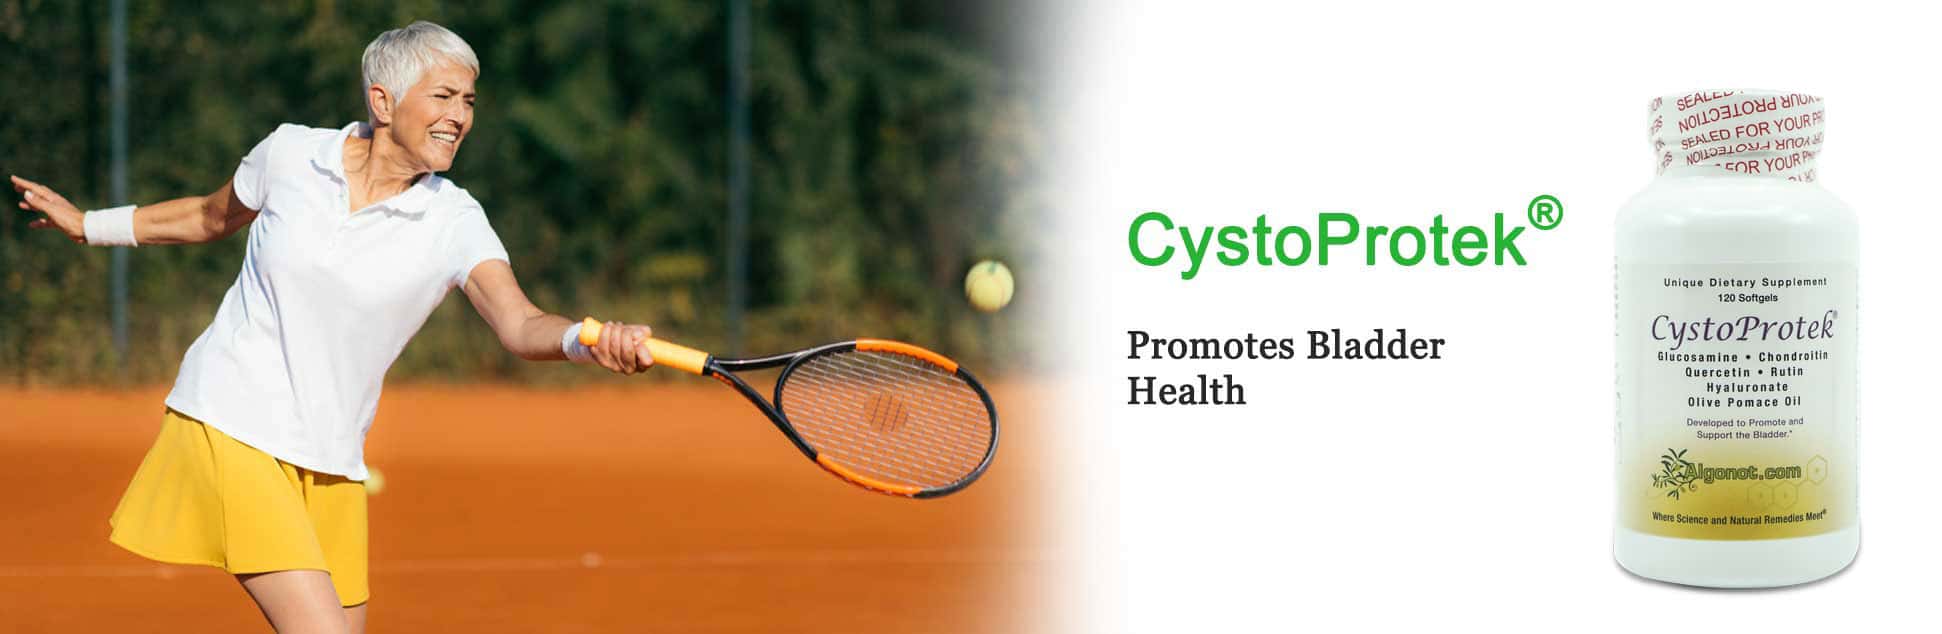 CystoProtek-supplement-nutraceutical-algonot-hero